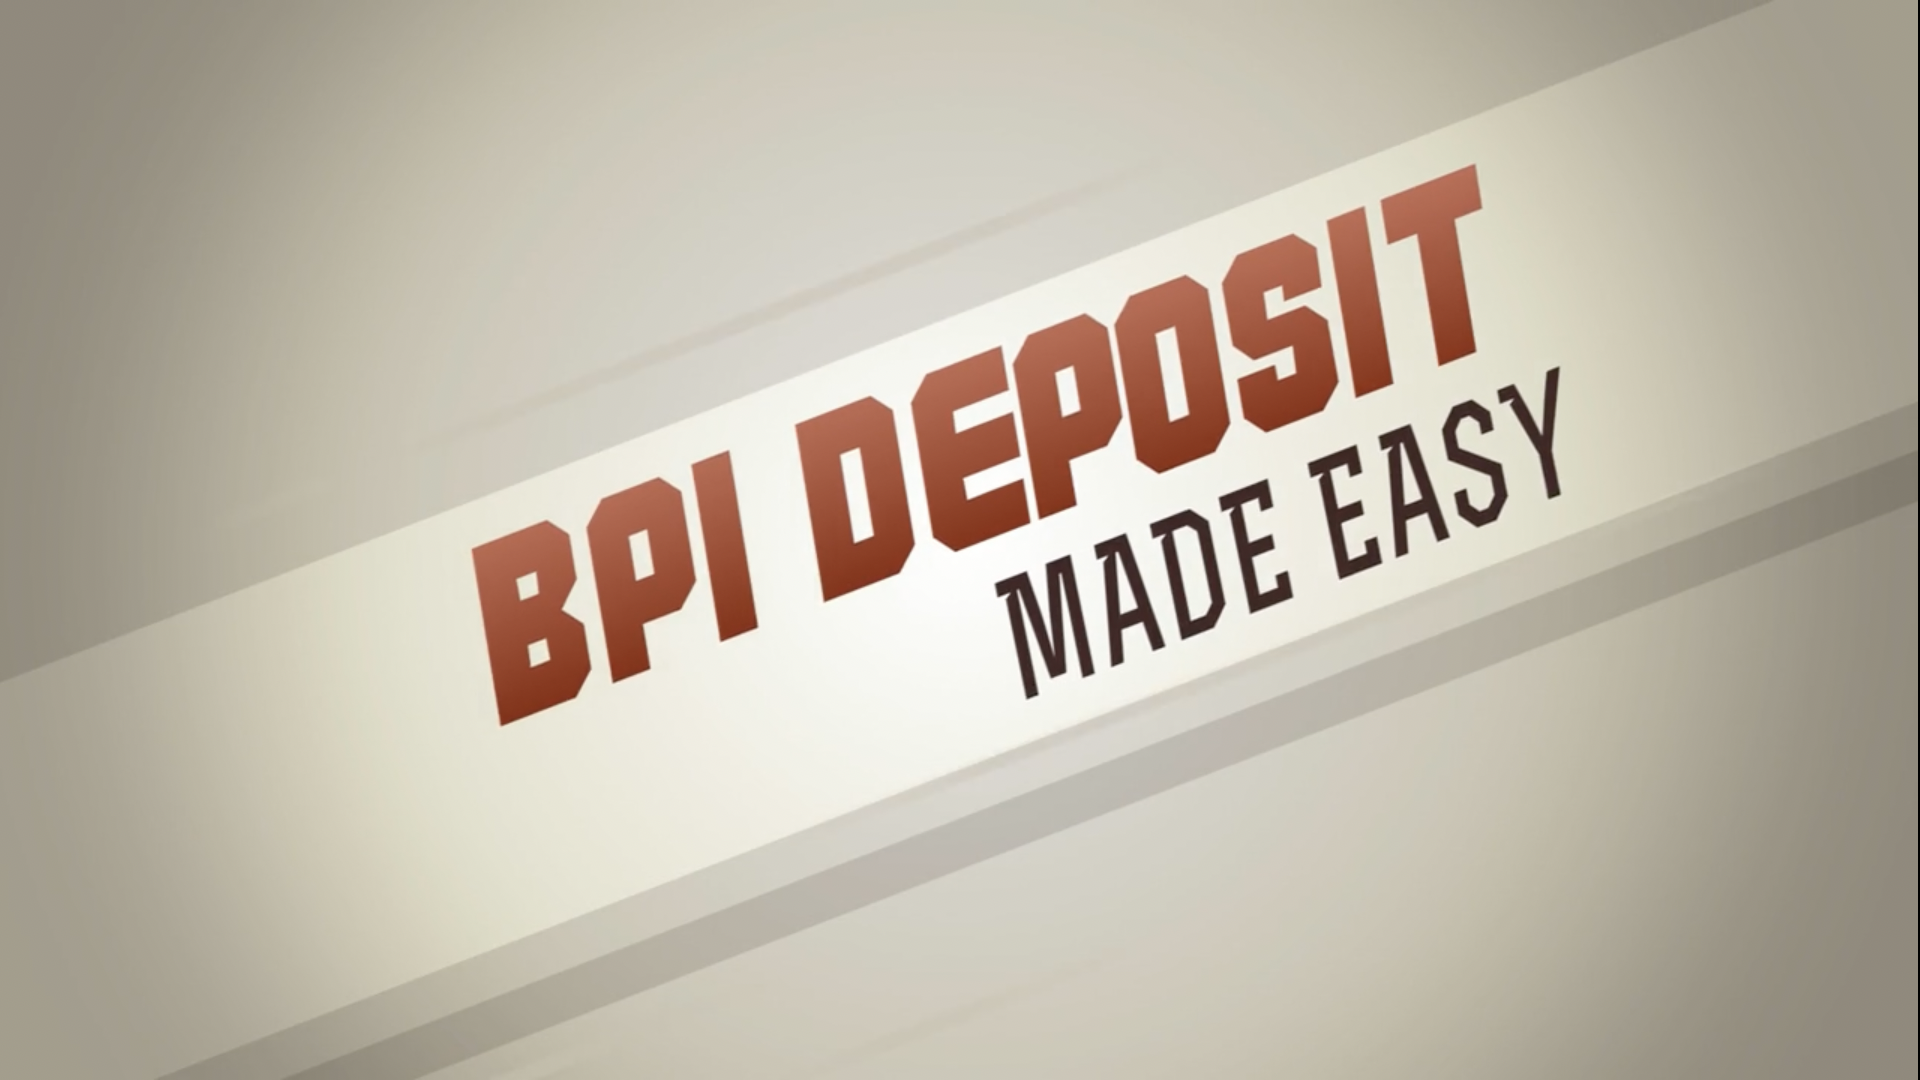 BPI Cash Deposit Machine Tutorial Video_image1.png